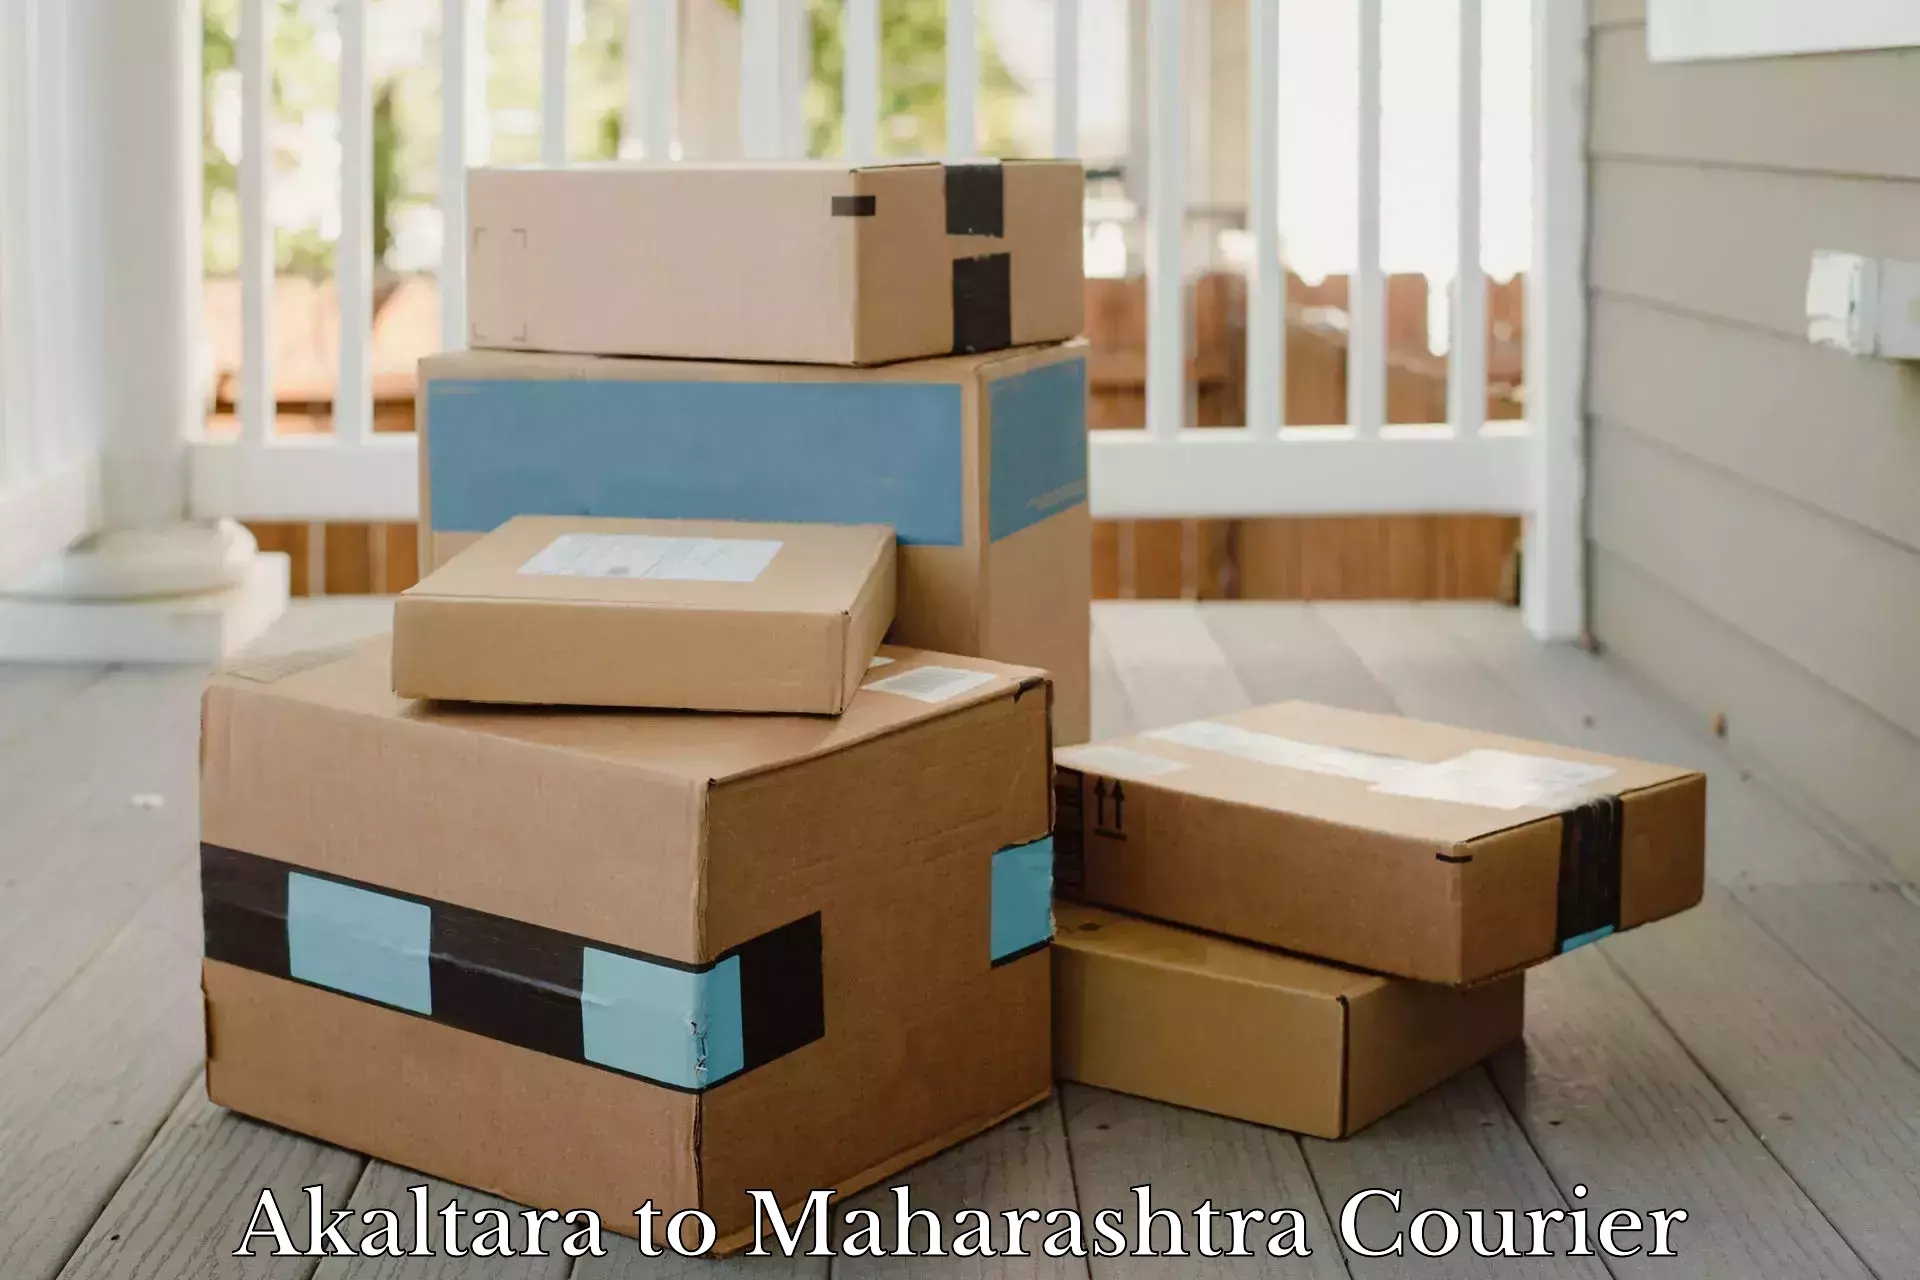 Courier service comparison Akaltara to Igatpuri